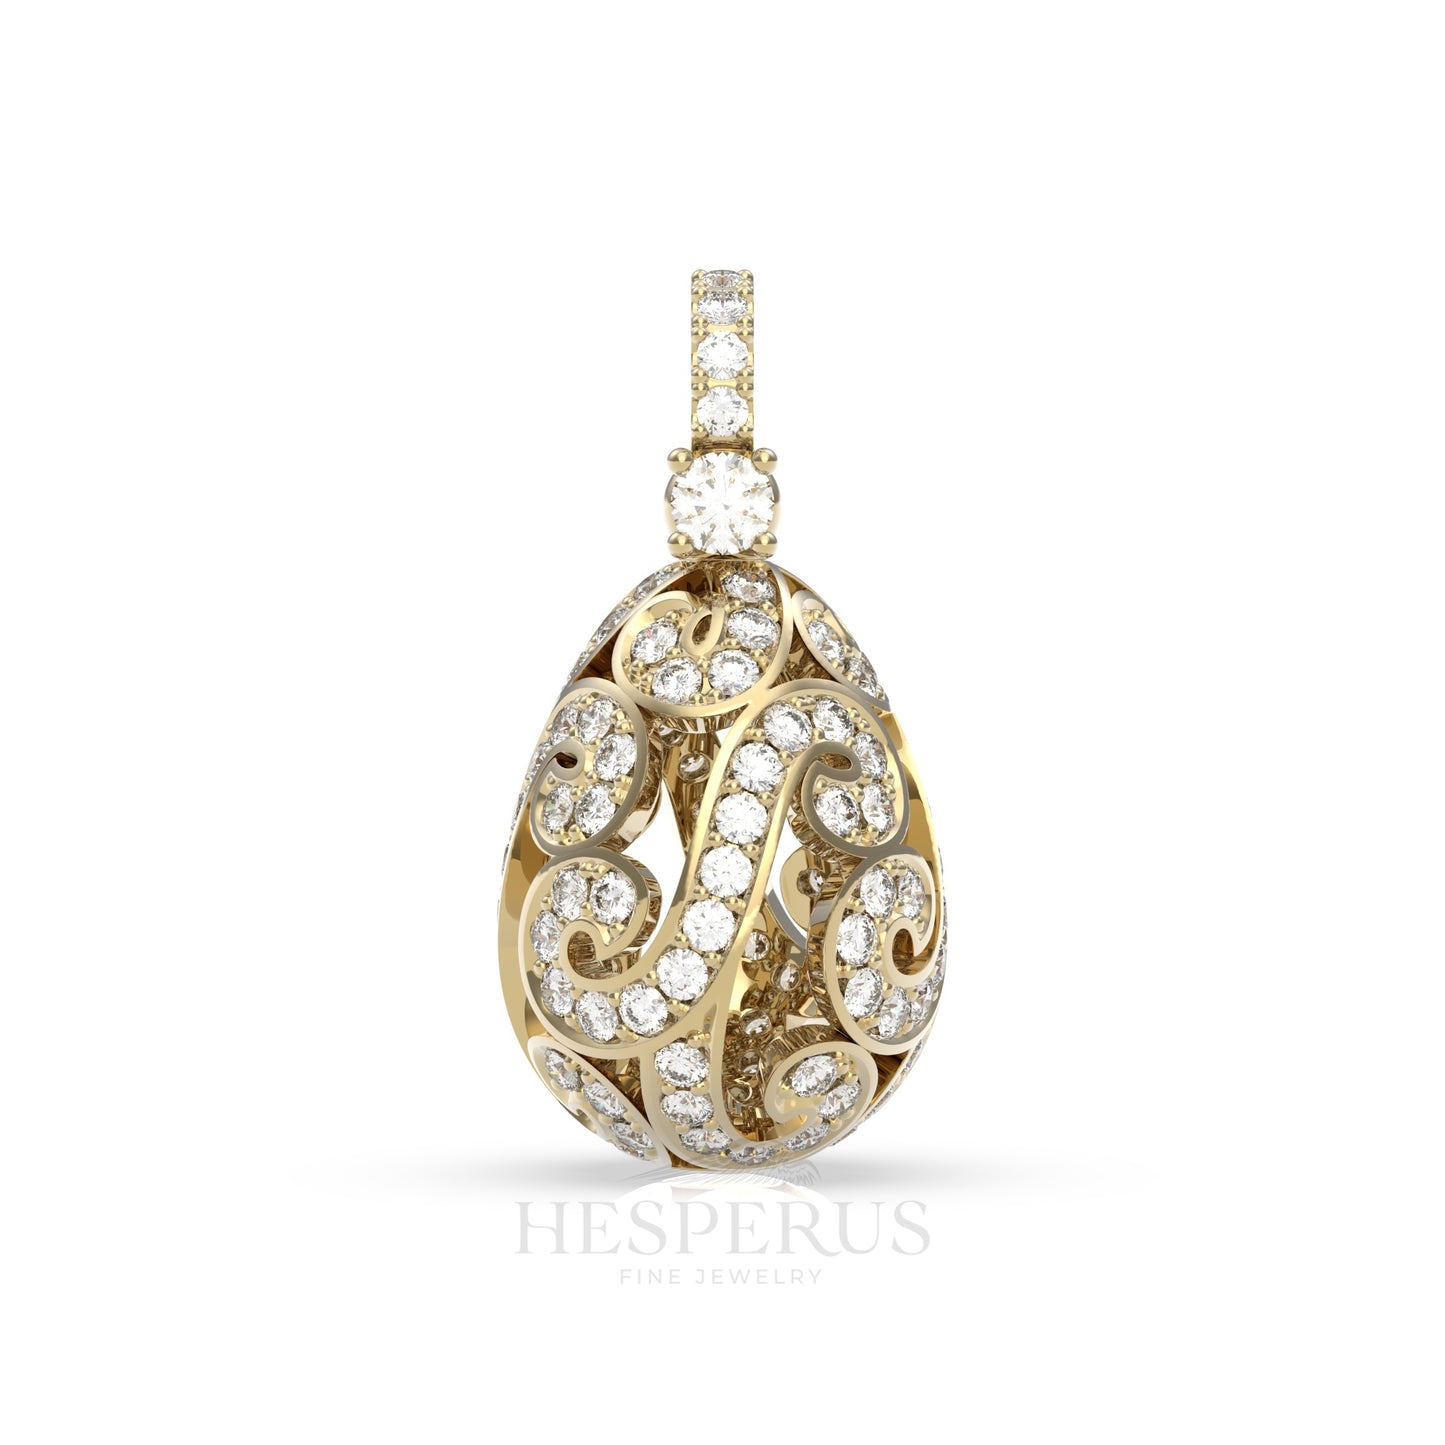 The Golden Egg-Hesperus Fine Jewelry